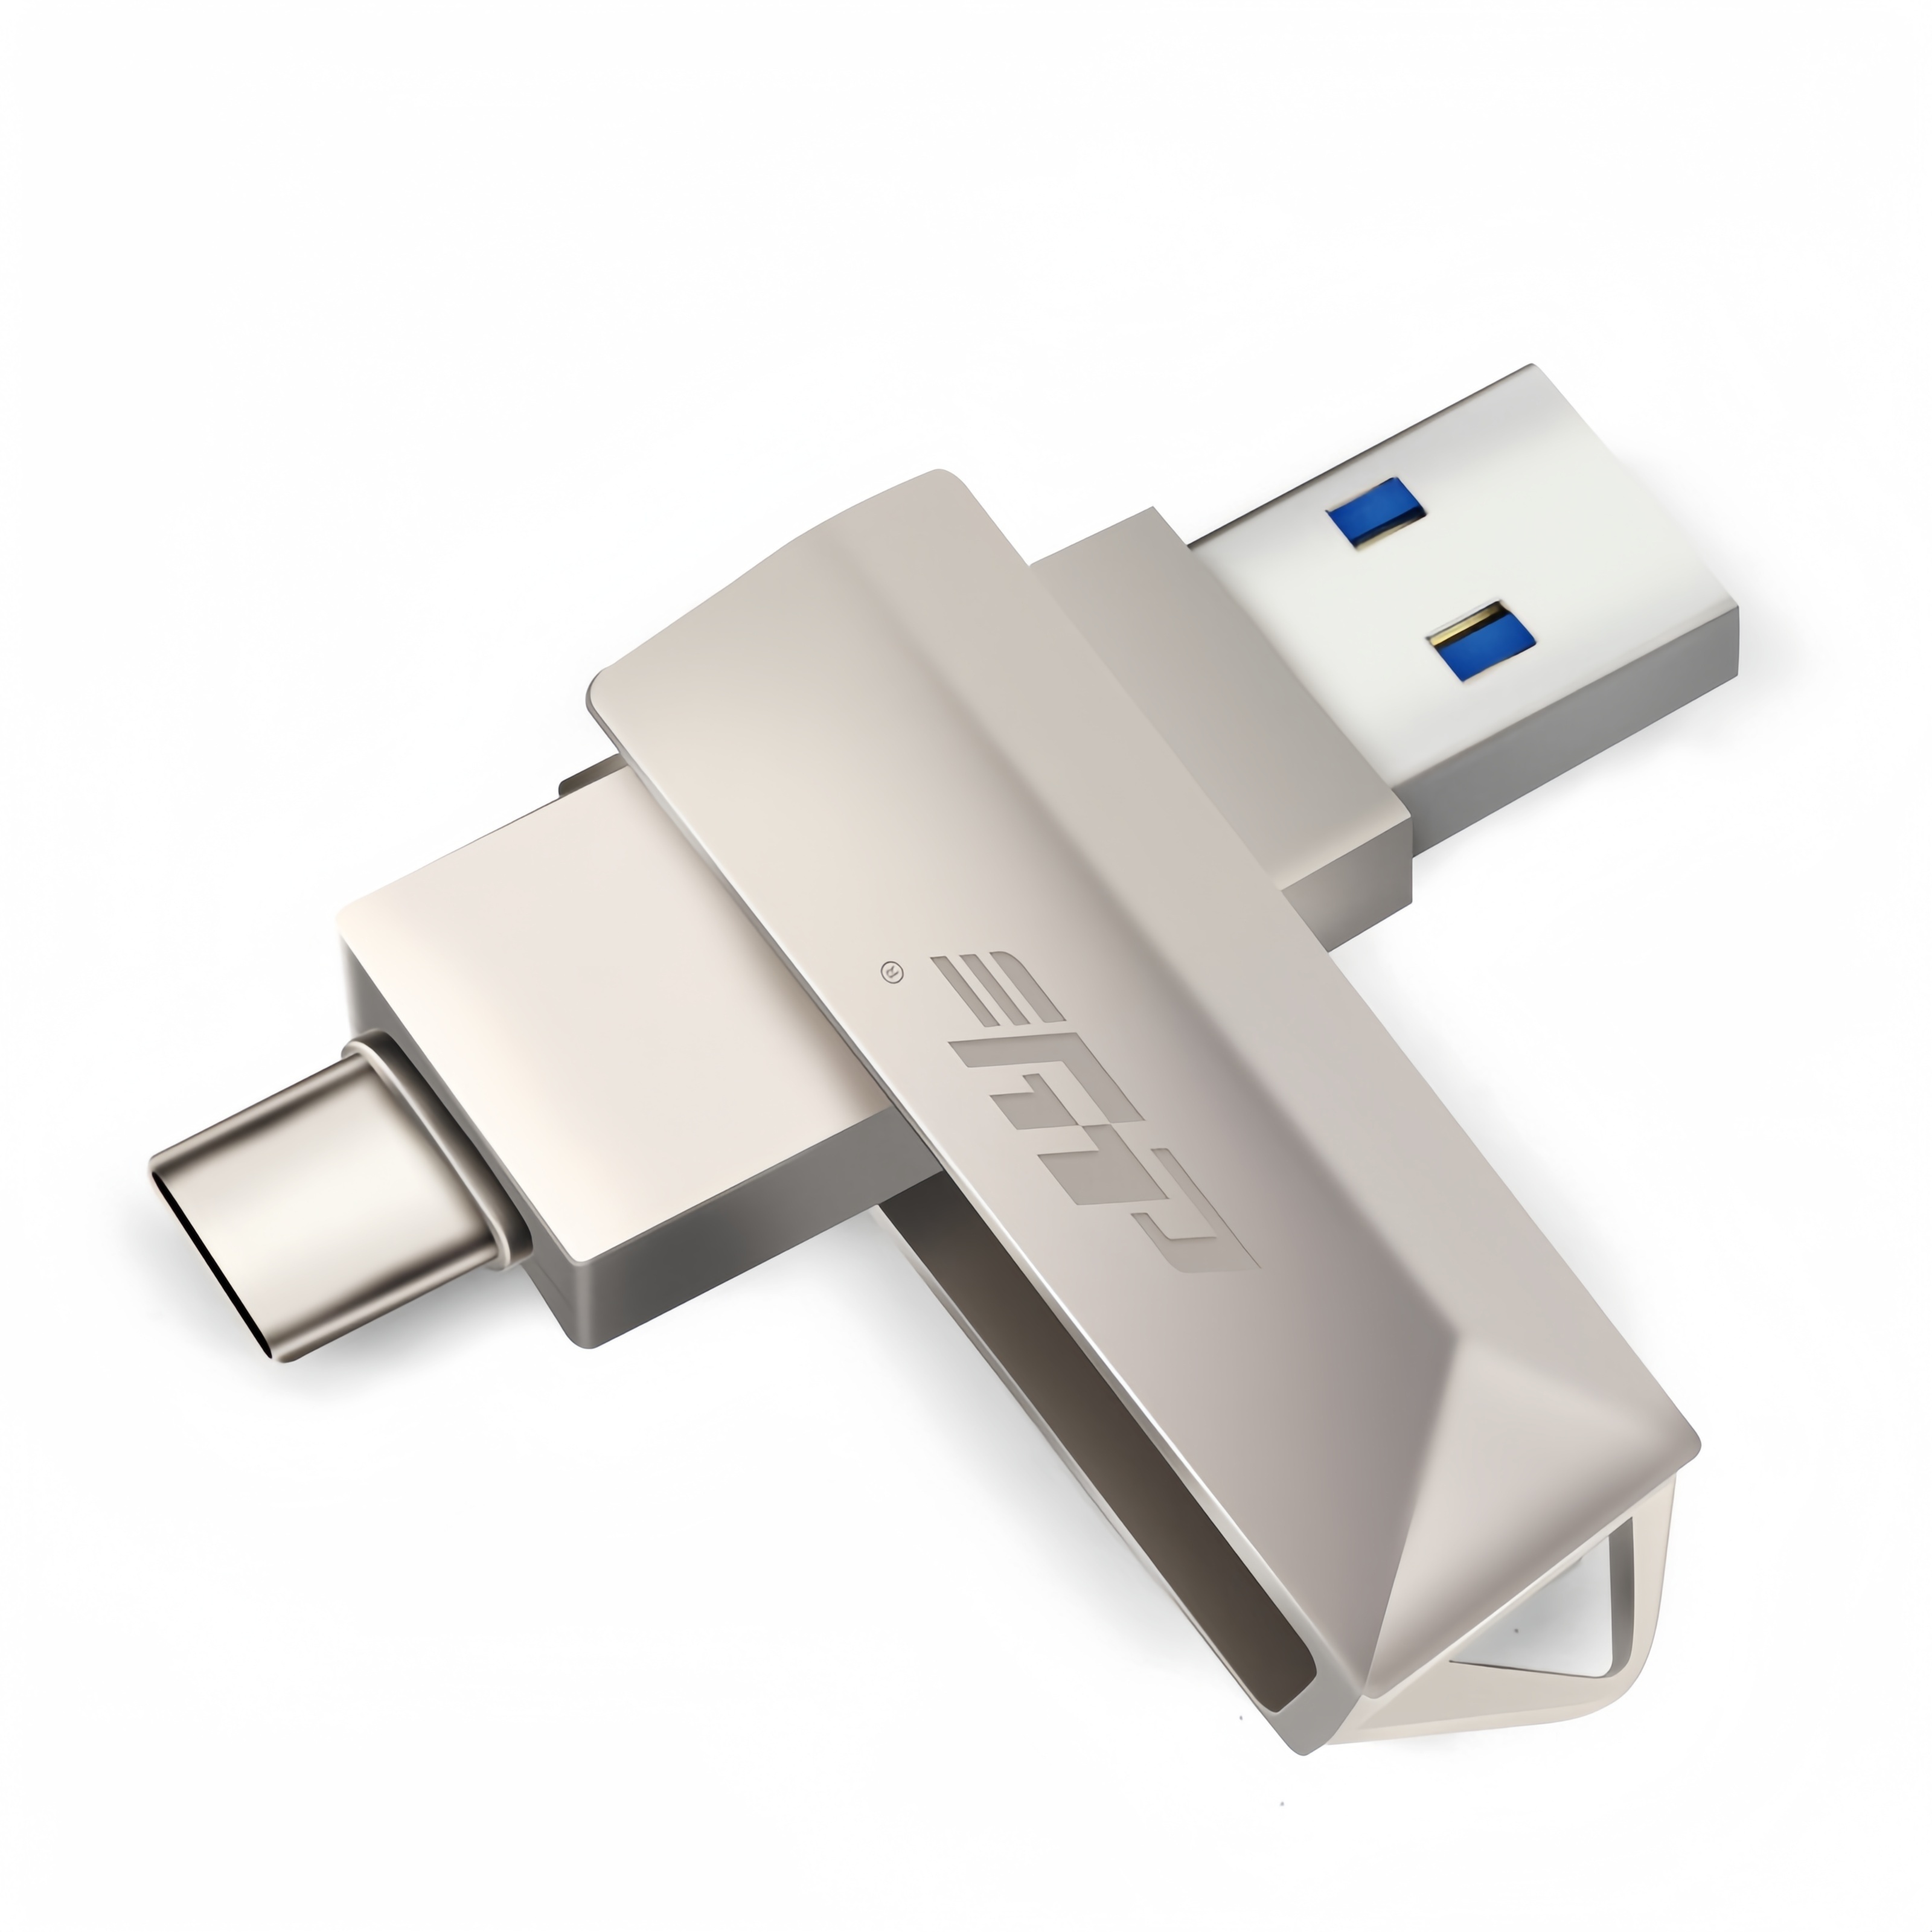 USB 3.0 Type-C Flash Drive 128GB 64GB 32GB USB-C Stick Pendrive Memory Data  Disk 